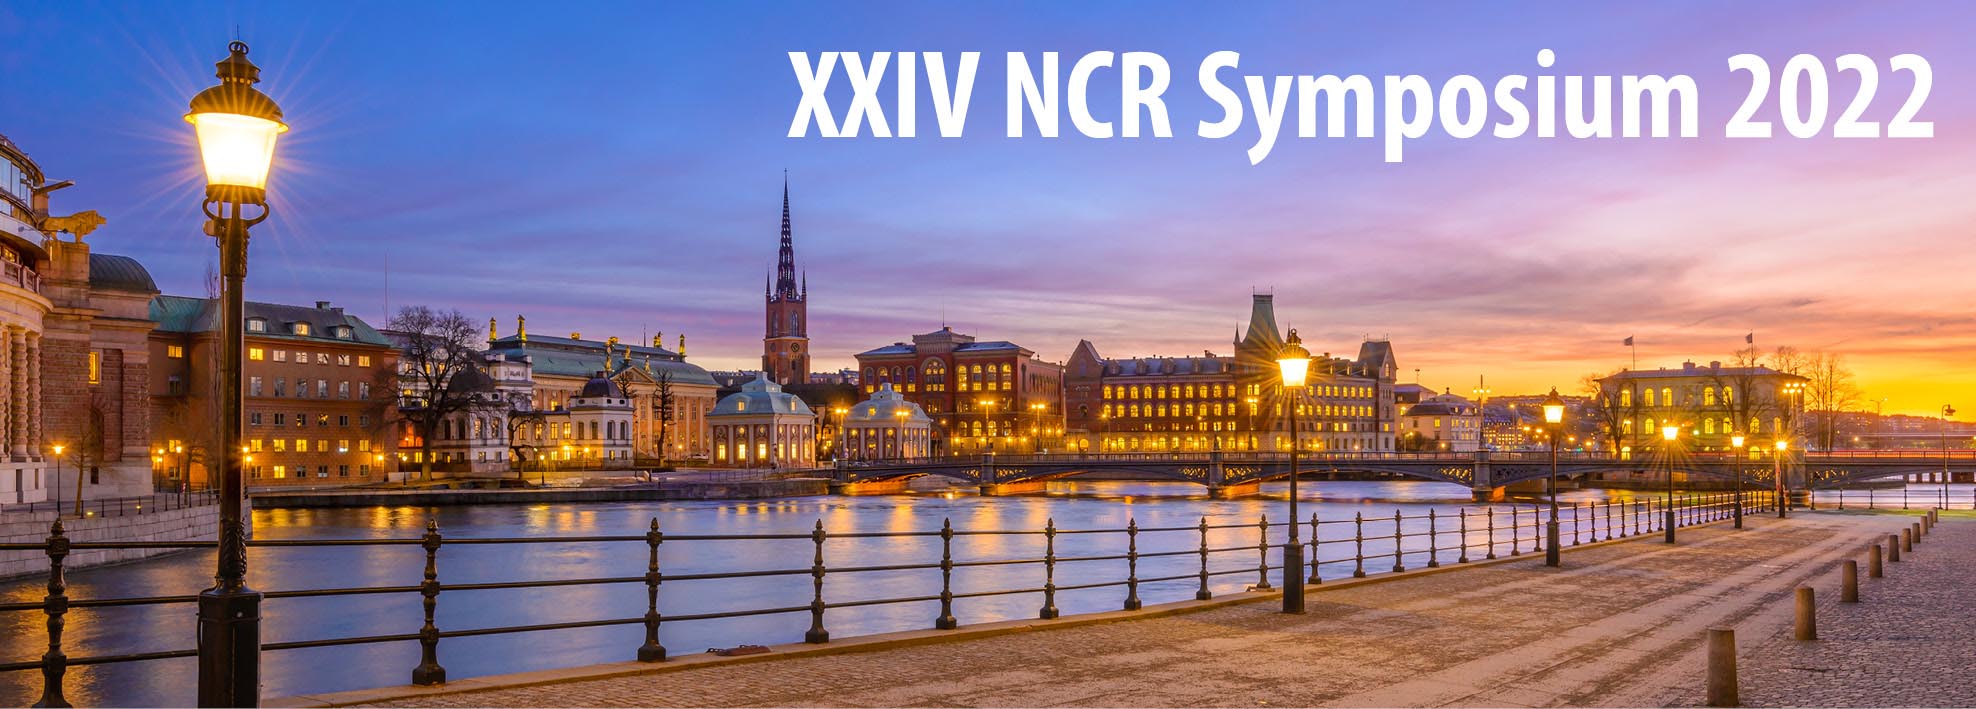 XXIV NCR Symposium, Stockholm 2022